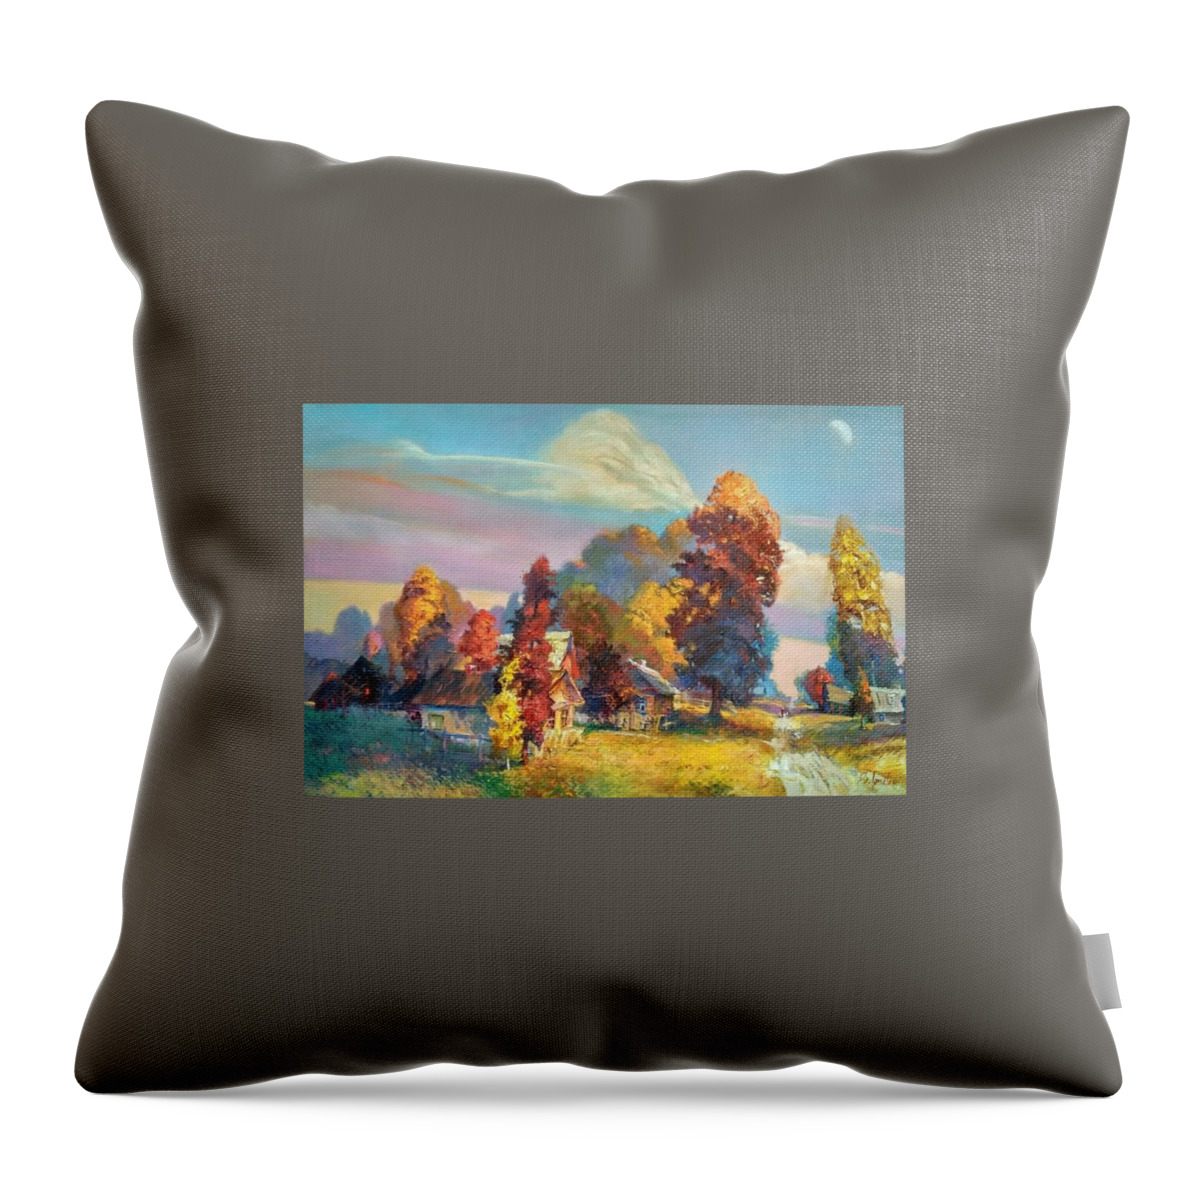 Ignatenko Throw Pillow featuring the painting Village by Sergey Ignatenko